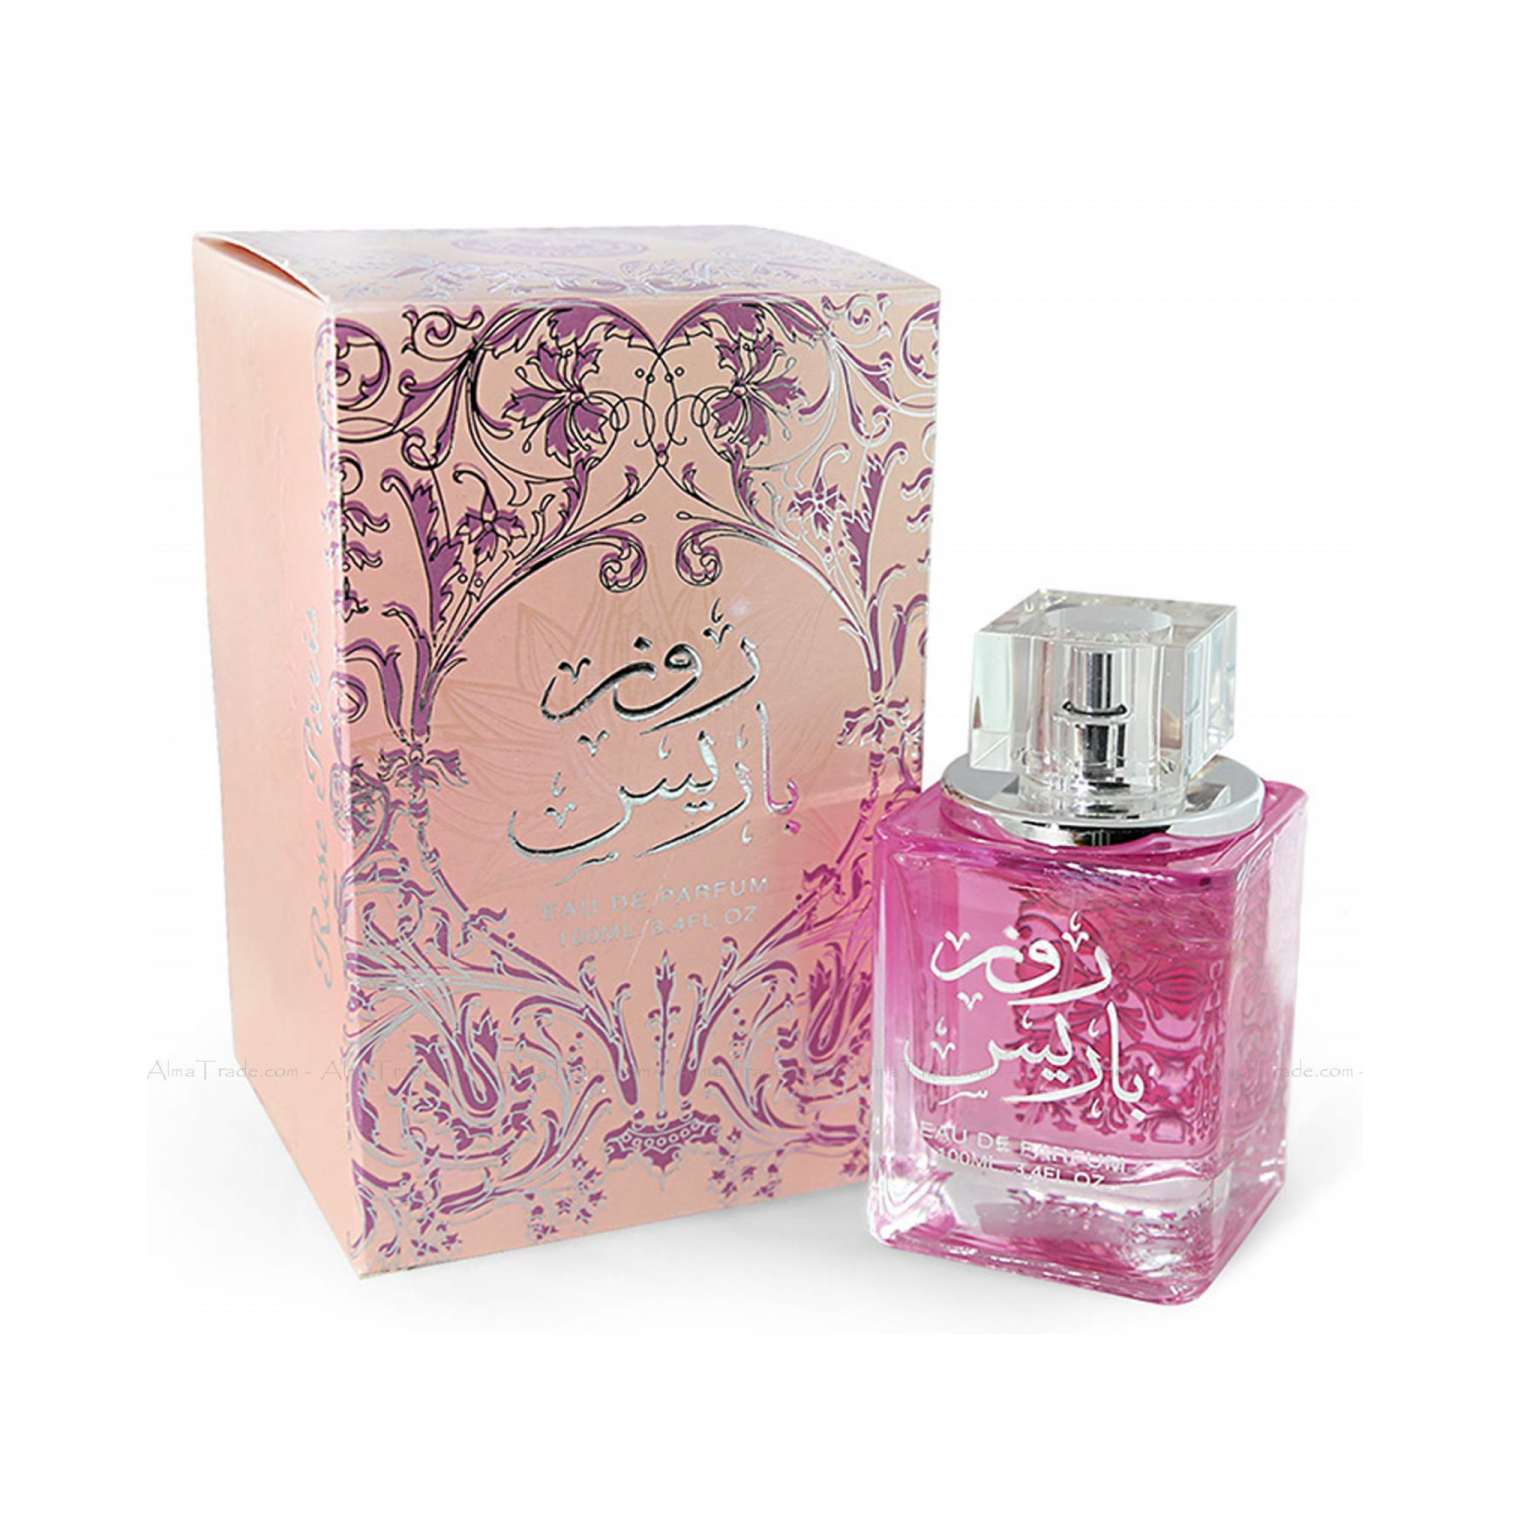 Osmanli Oud Hurrem HÜRREM The Cheerfull EDP 100mL Perfume Fragrance ...